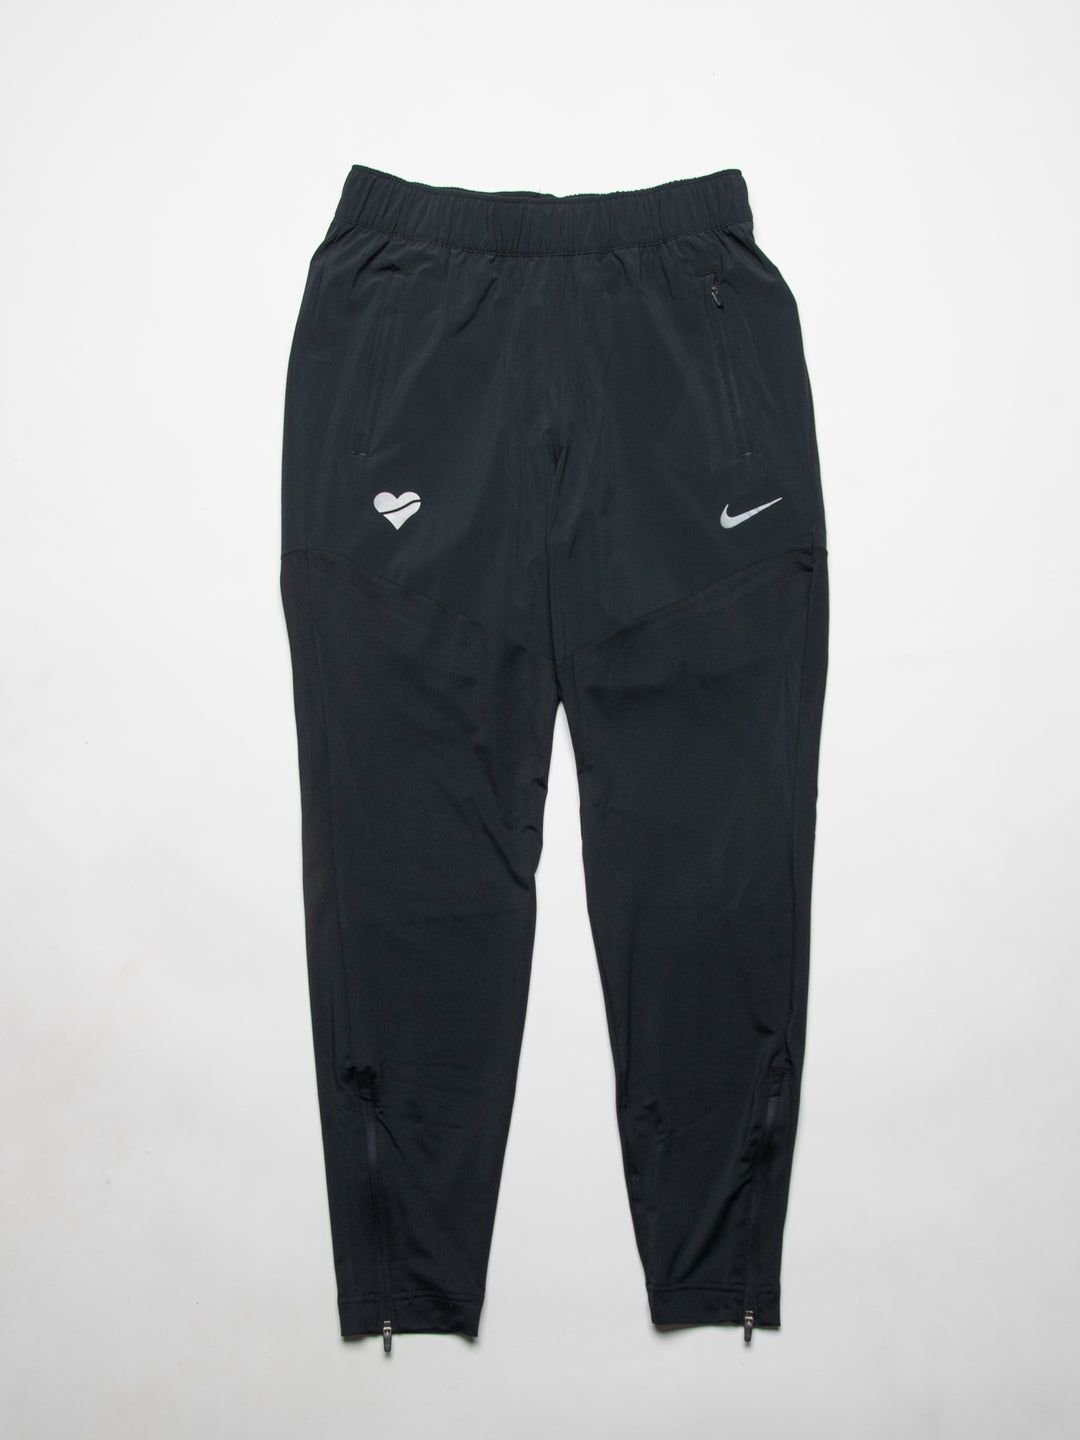 Featured Kit: - Nike Dri-Fit High Waisted Pants - Nike Dri-Fit